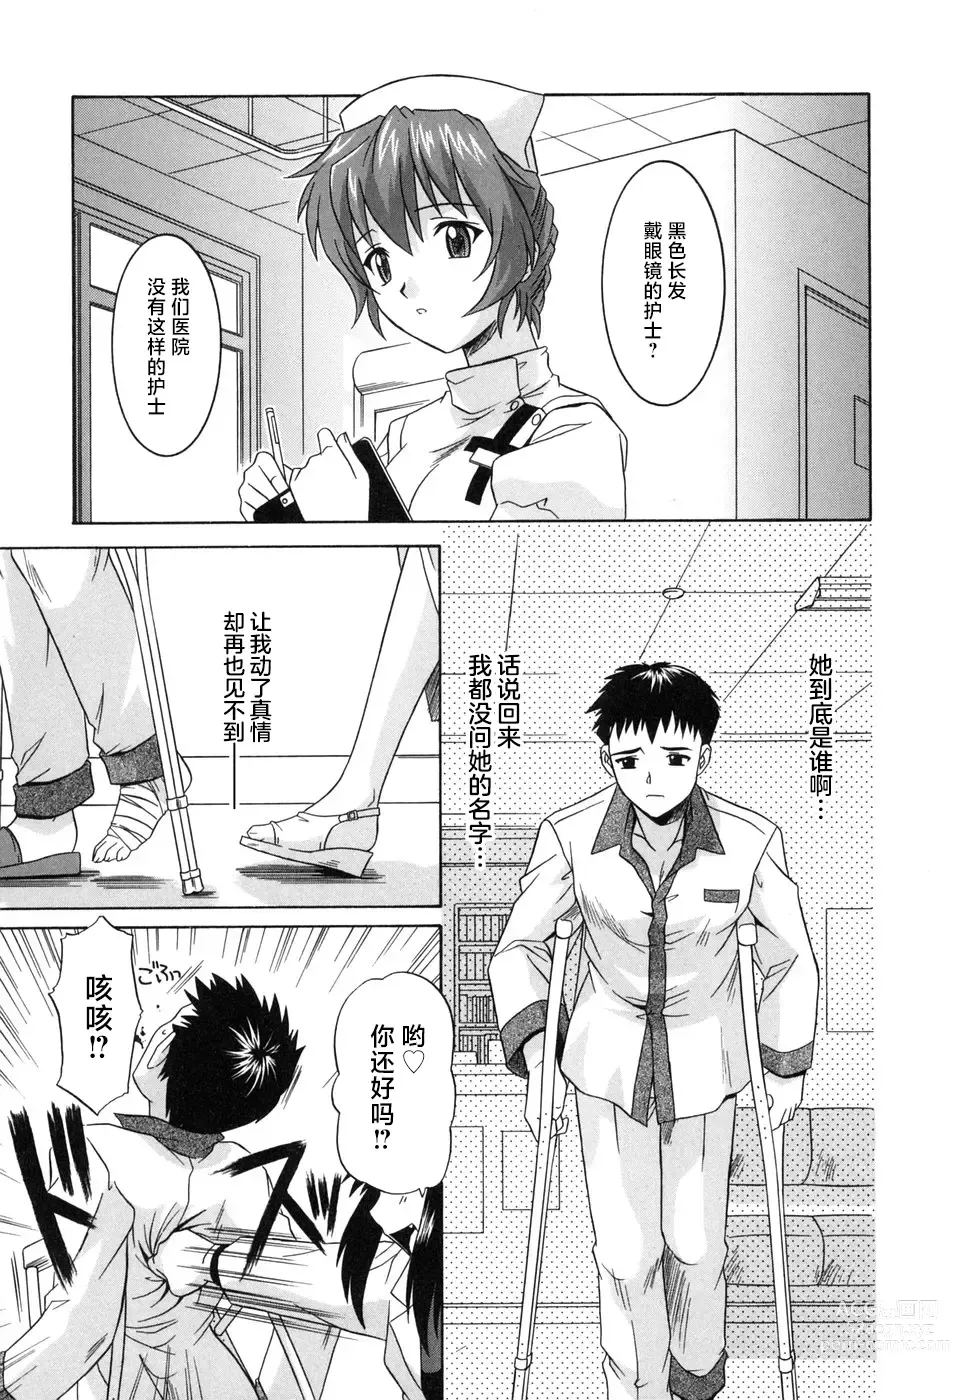 Page 161 of manga Sonoki ni Sasenaide - Please Dont make it the mind.